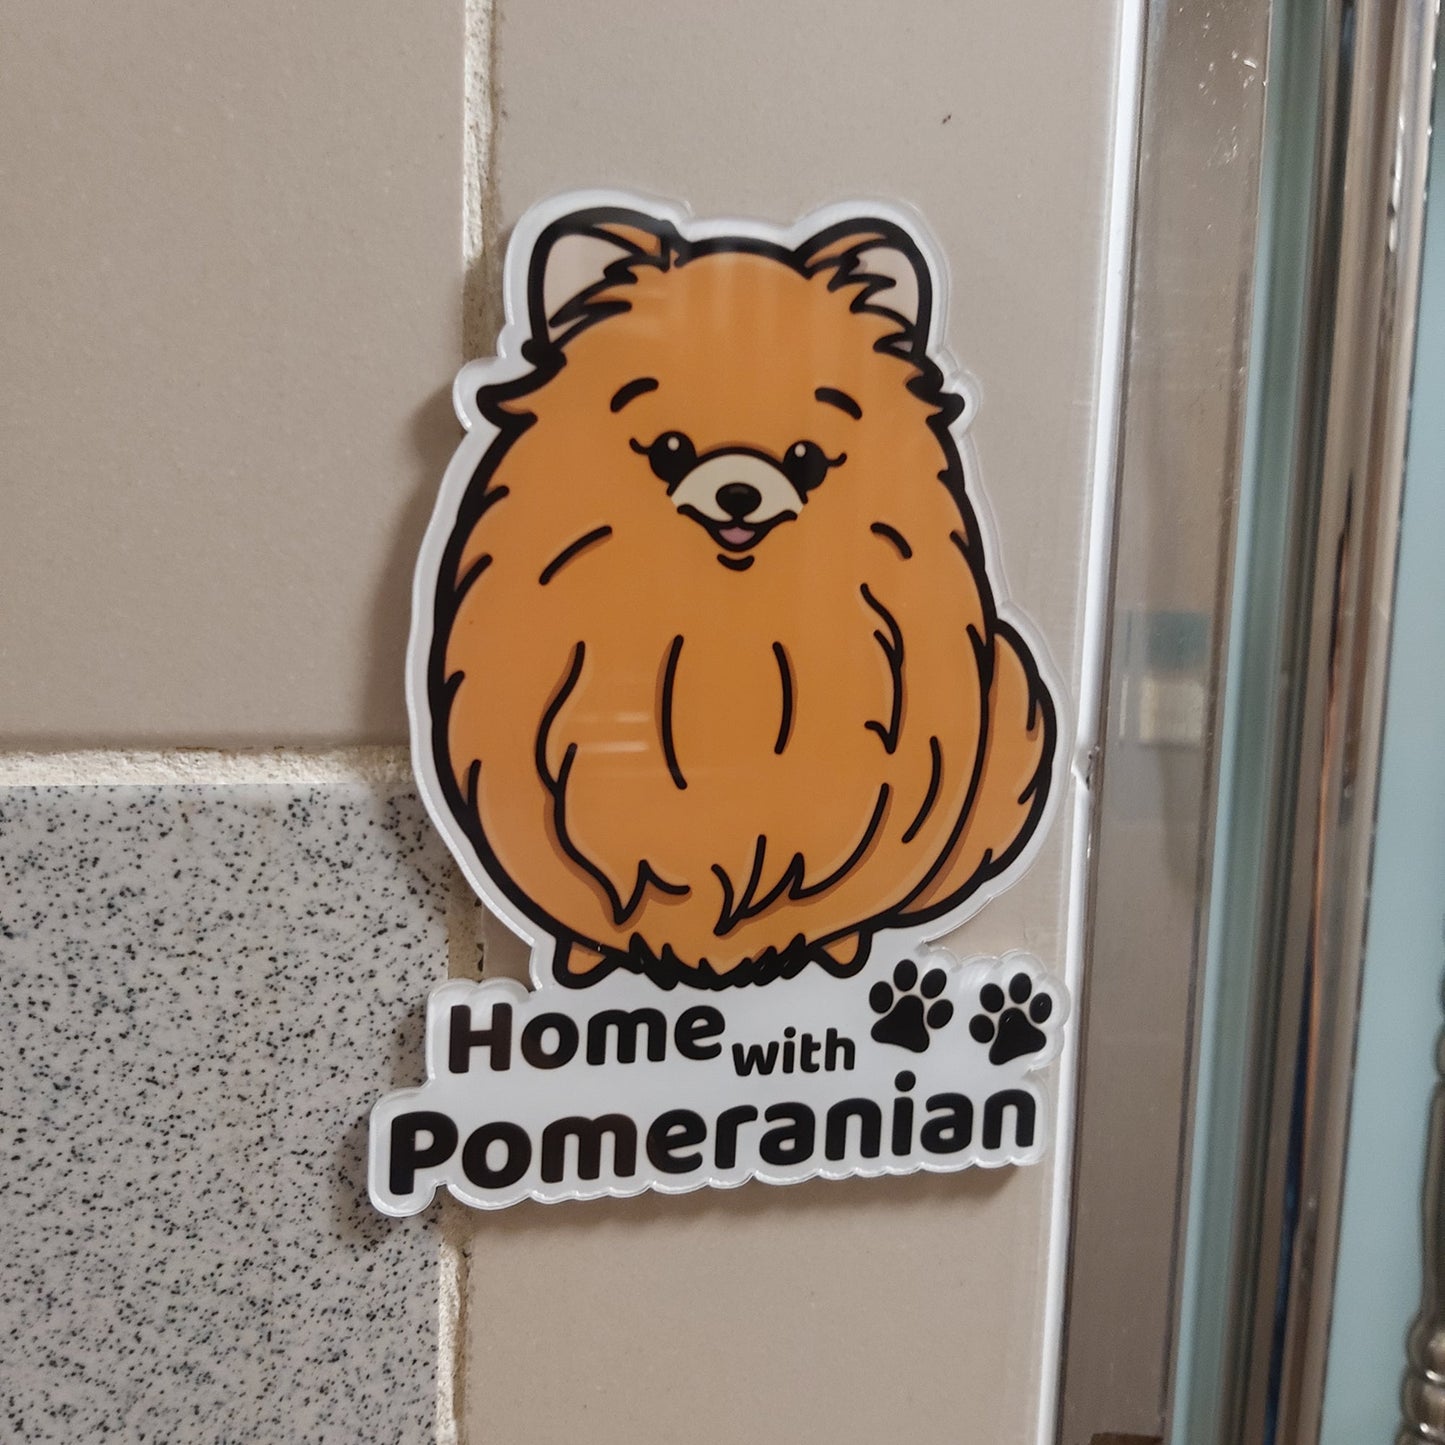 Home with Pomeranian 松鼠狗 博美犬門牌